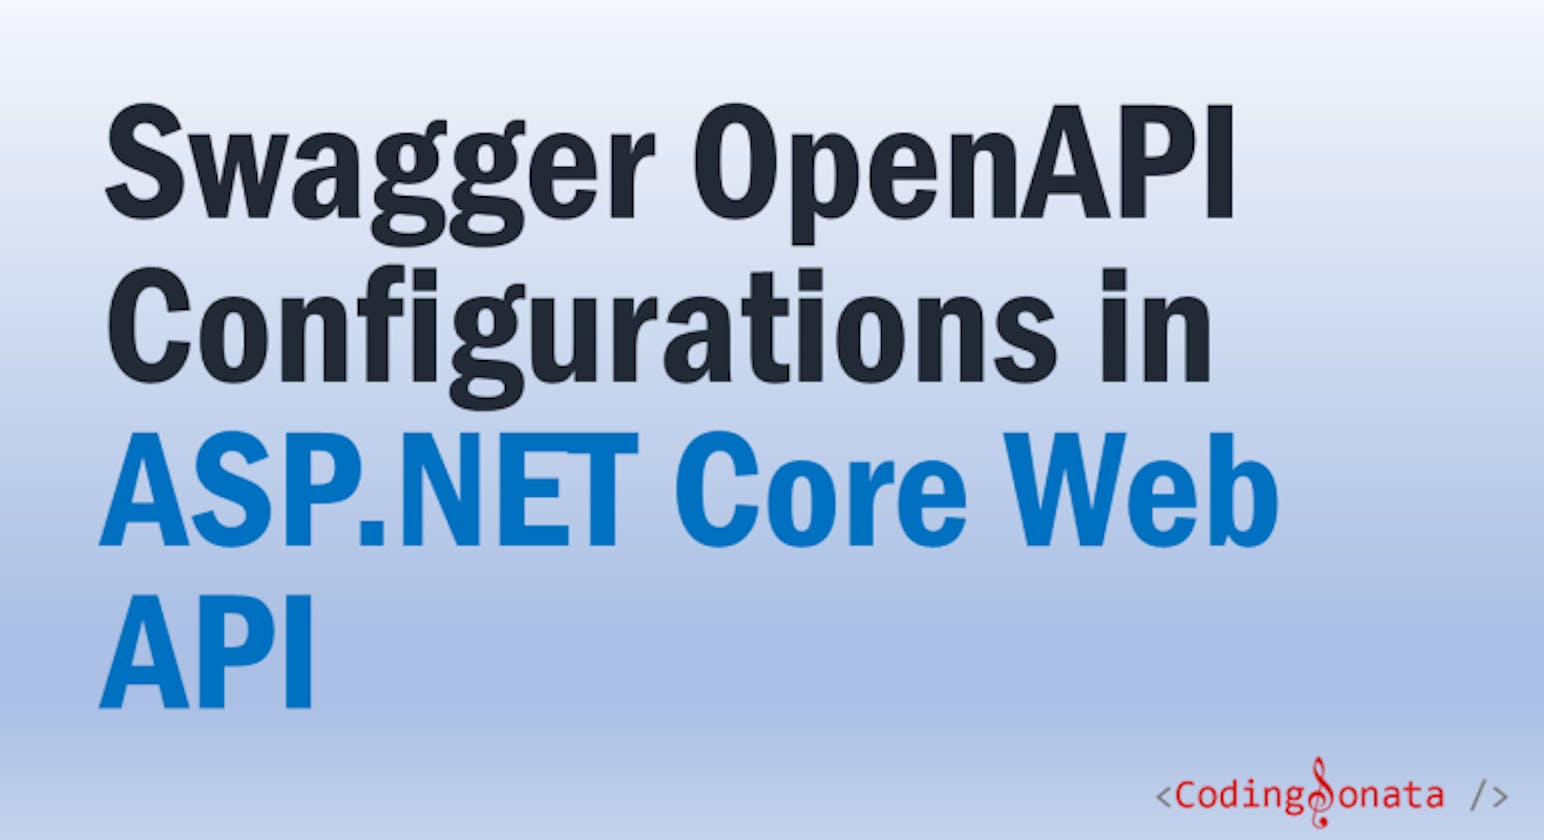 Swagger OpenAPI Configurations in ASP.NET Core Web API